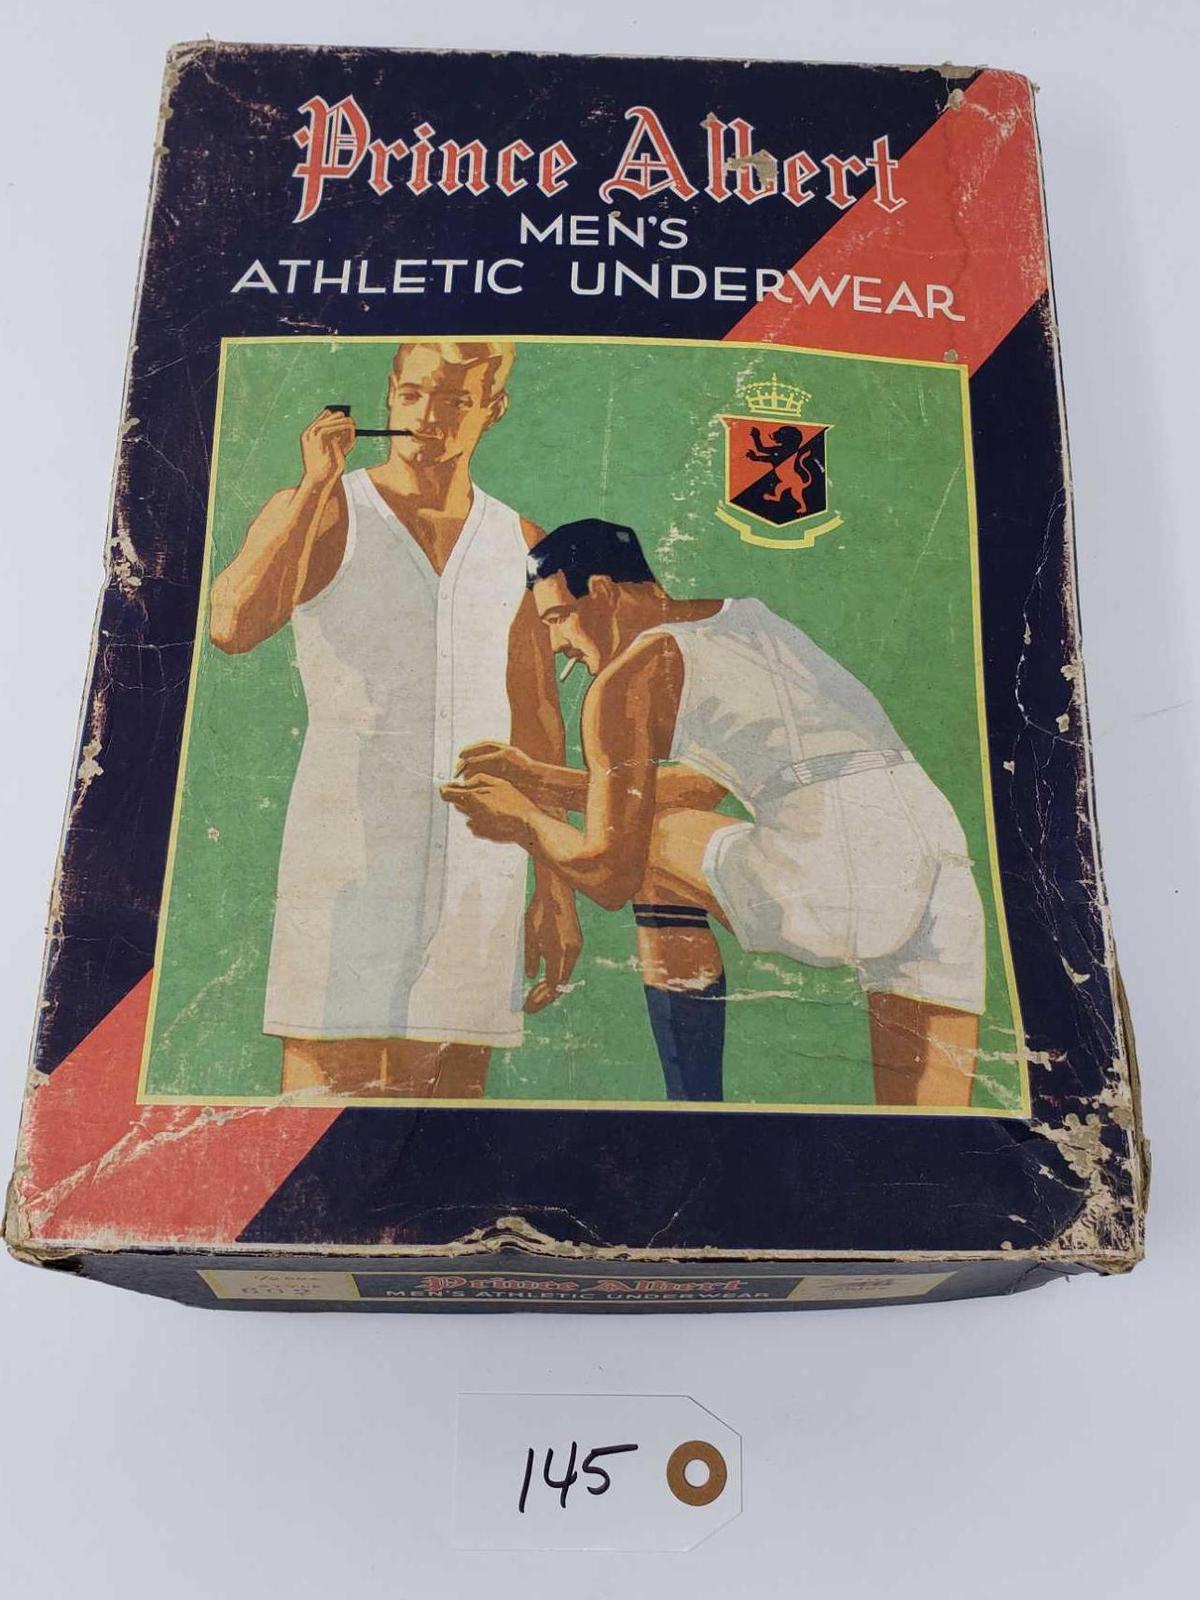 Prince Albert Men's Athletic Underwear